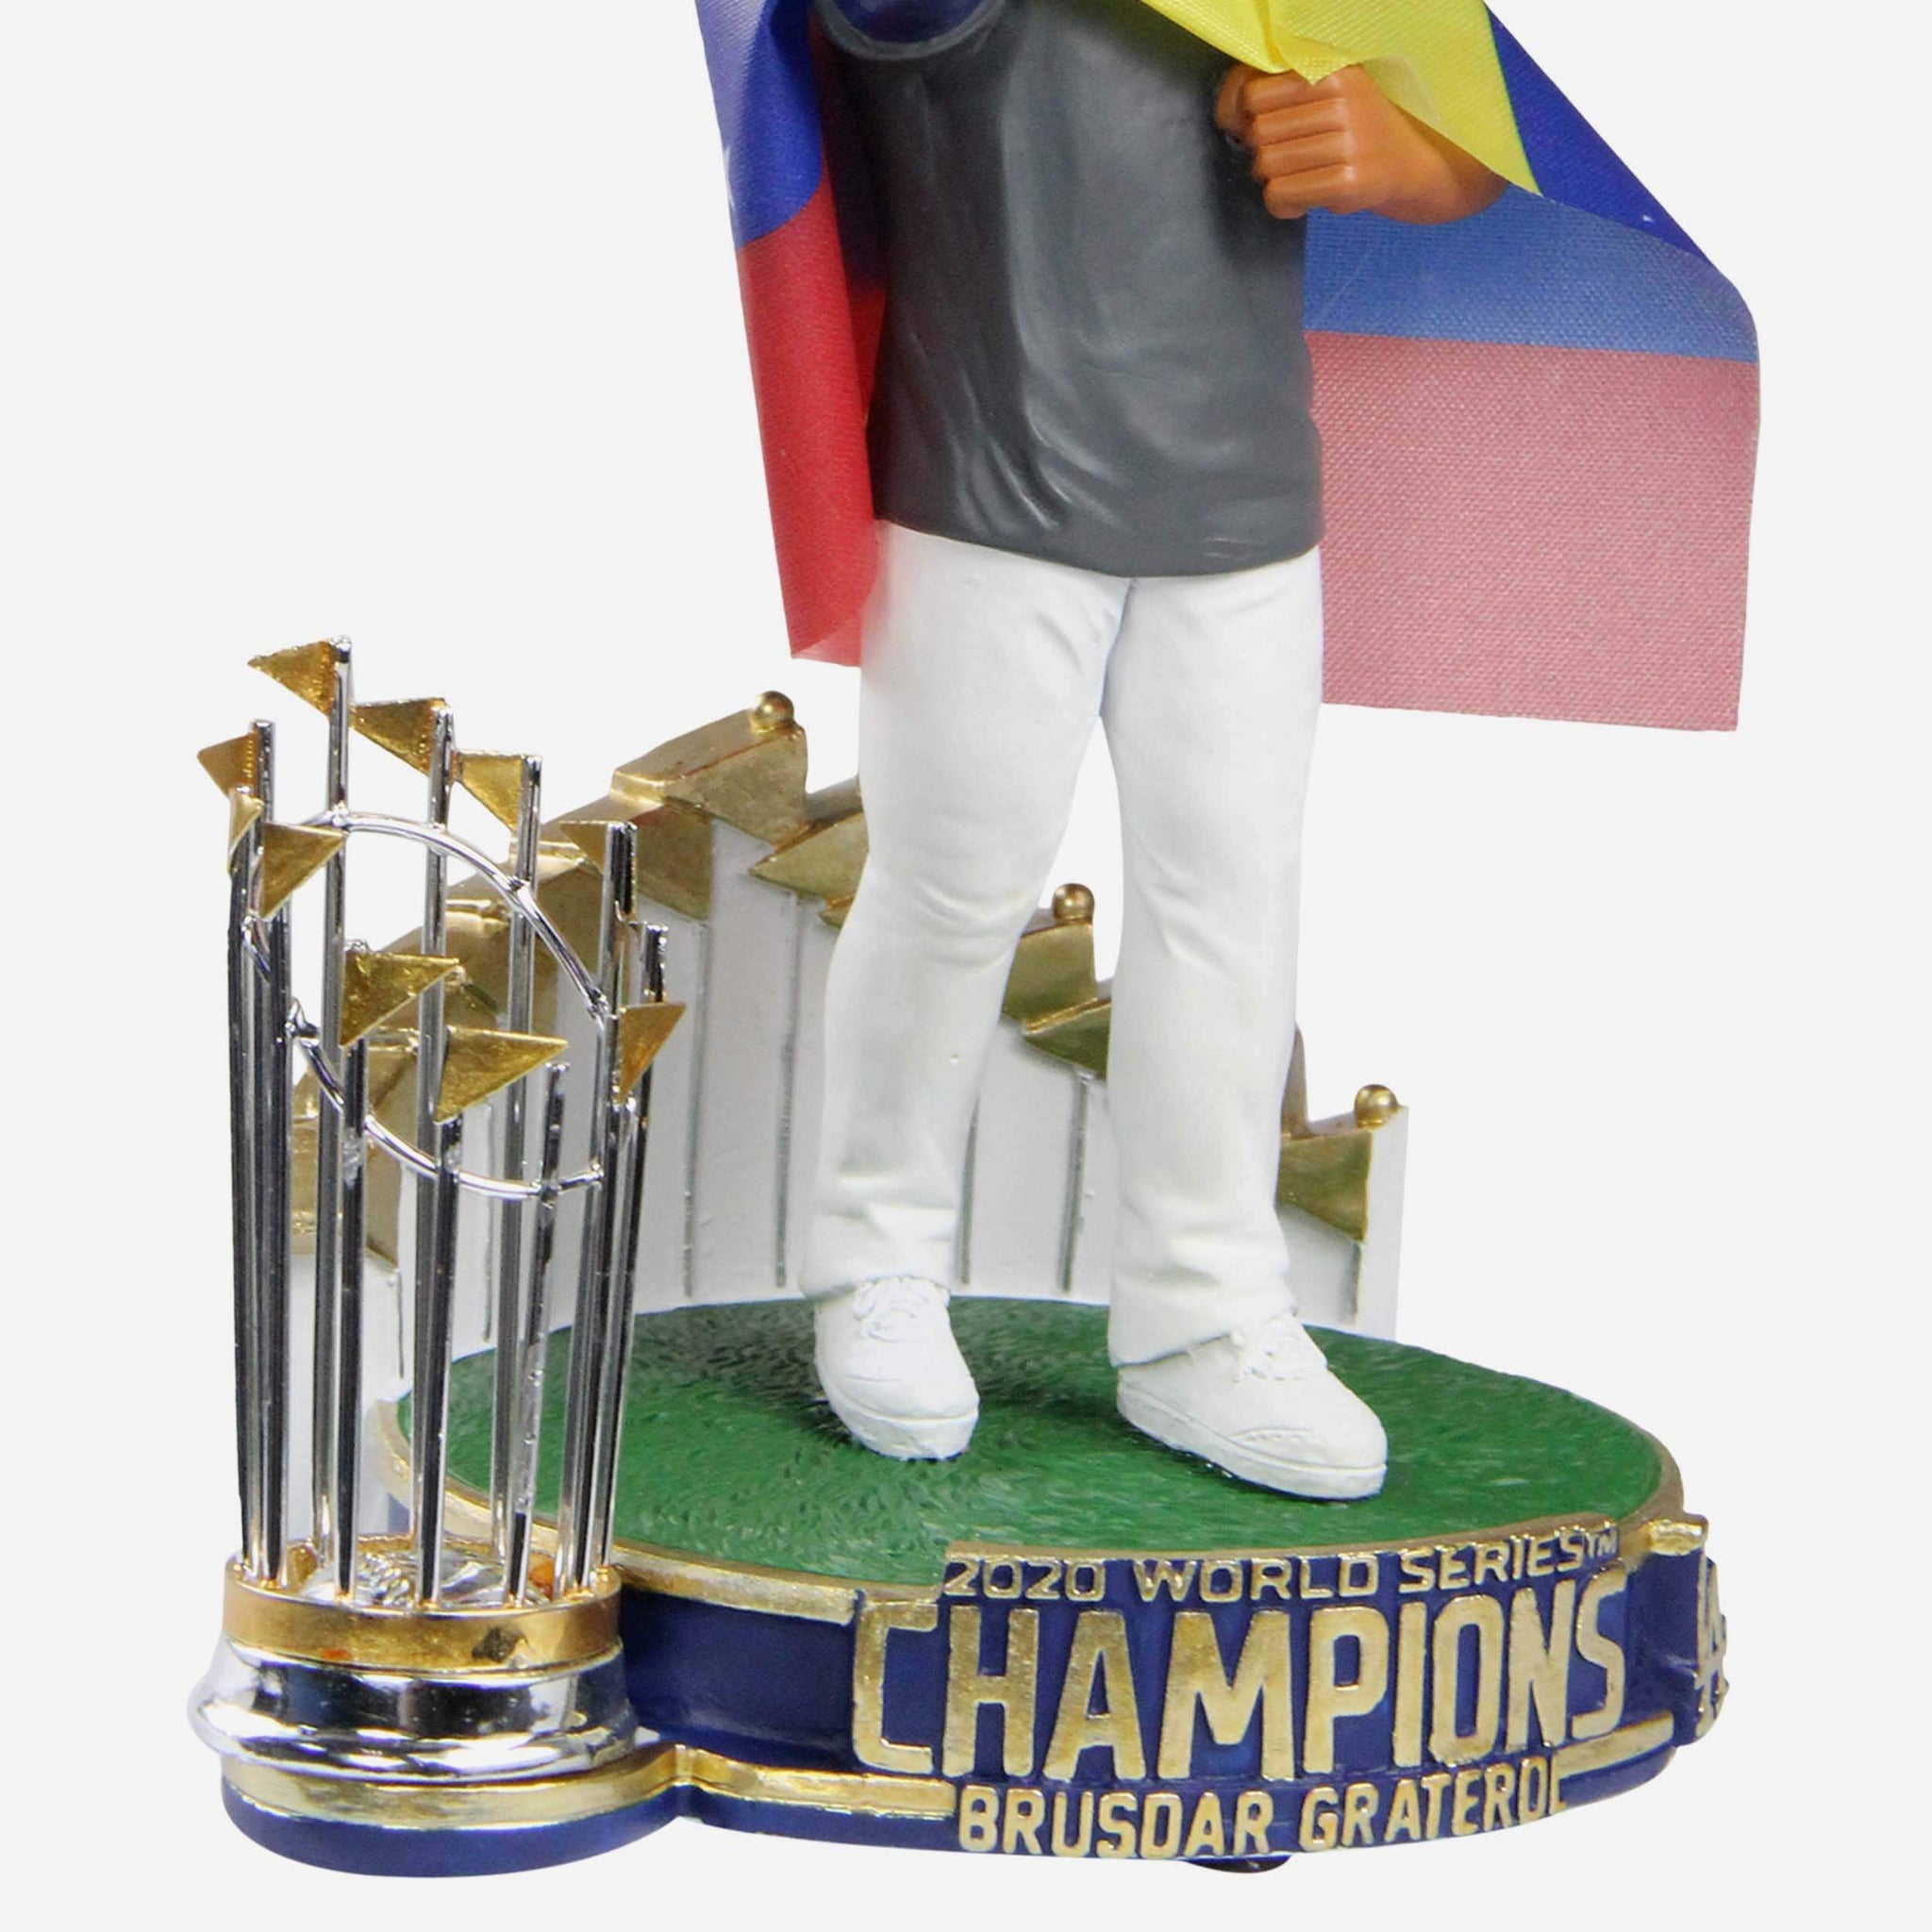 Dodgers 2020 World Series Champions Commemorative Trophy